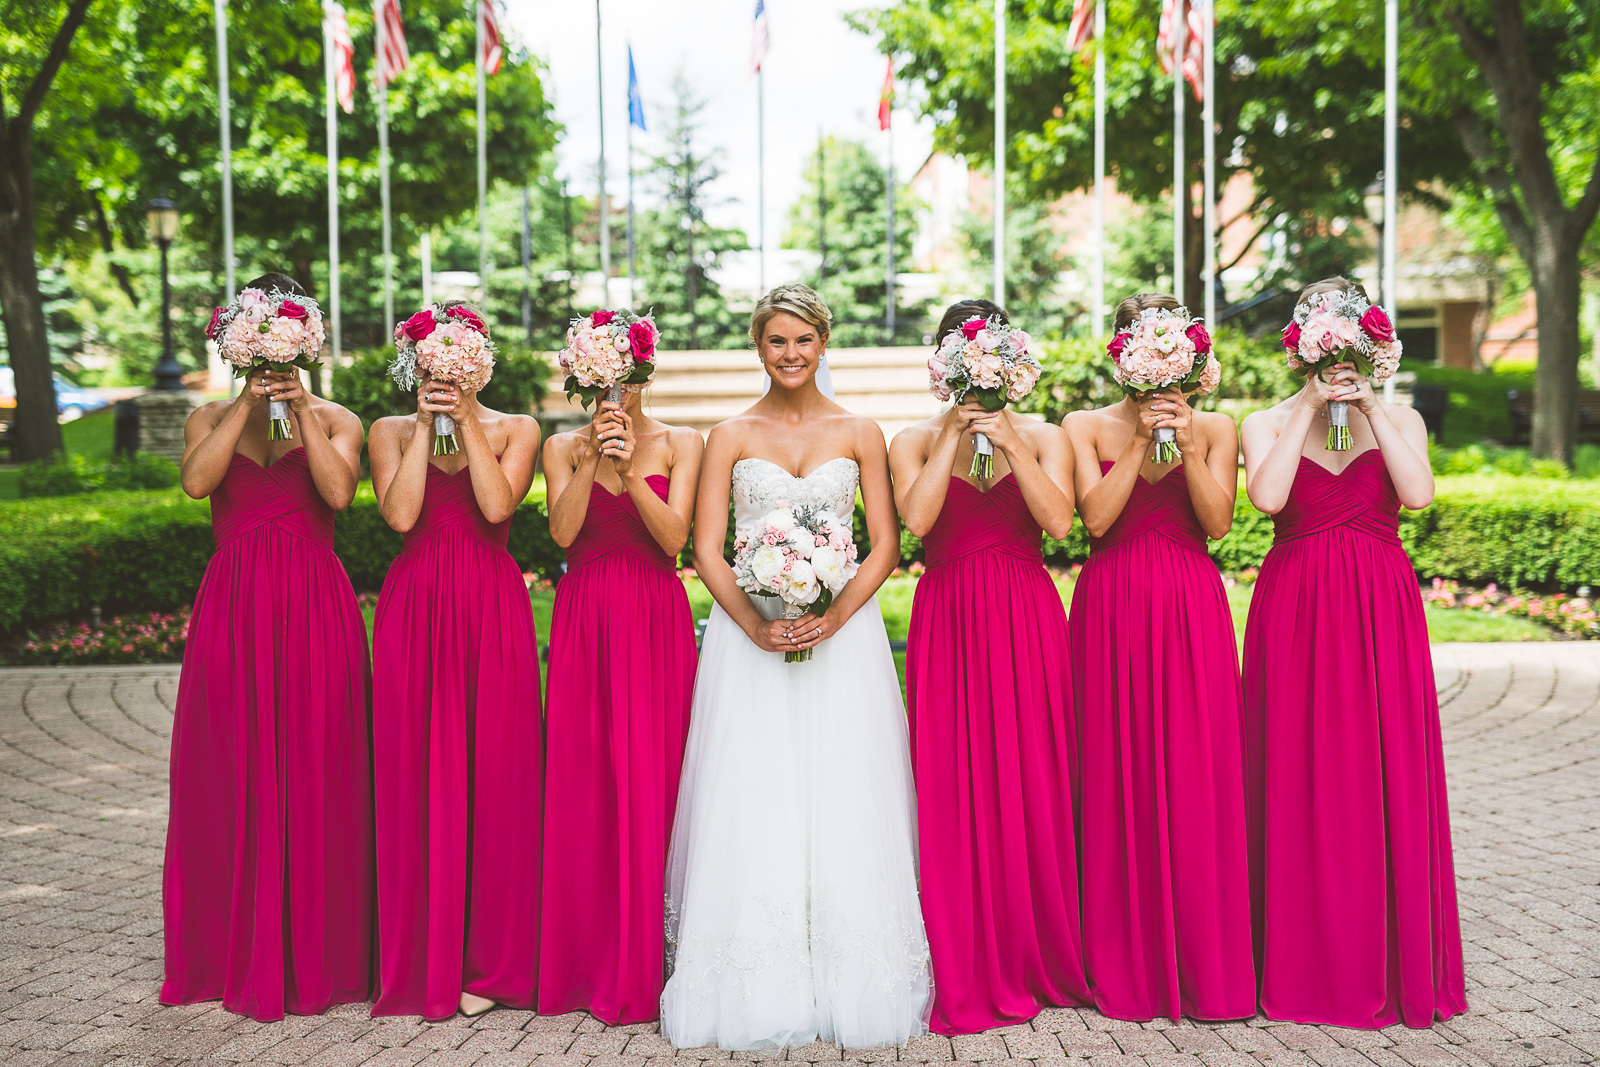 39 bridesmaids - Kristina + Dave // Wedding Photographer in Chicago